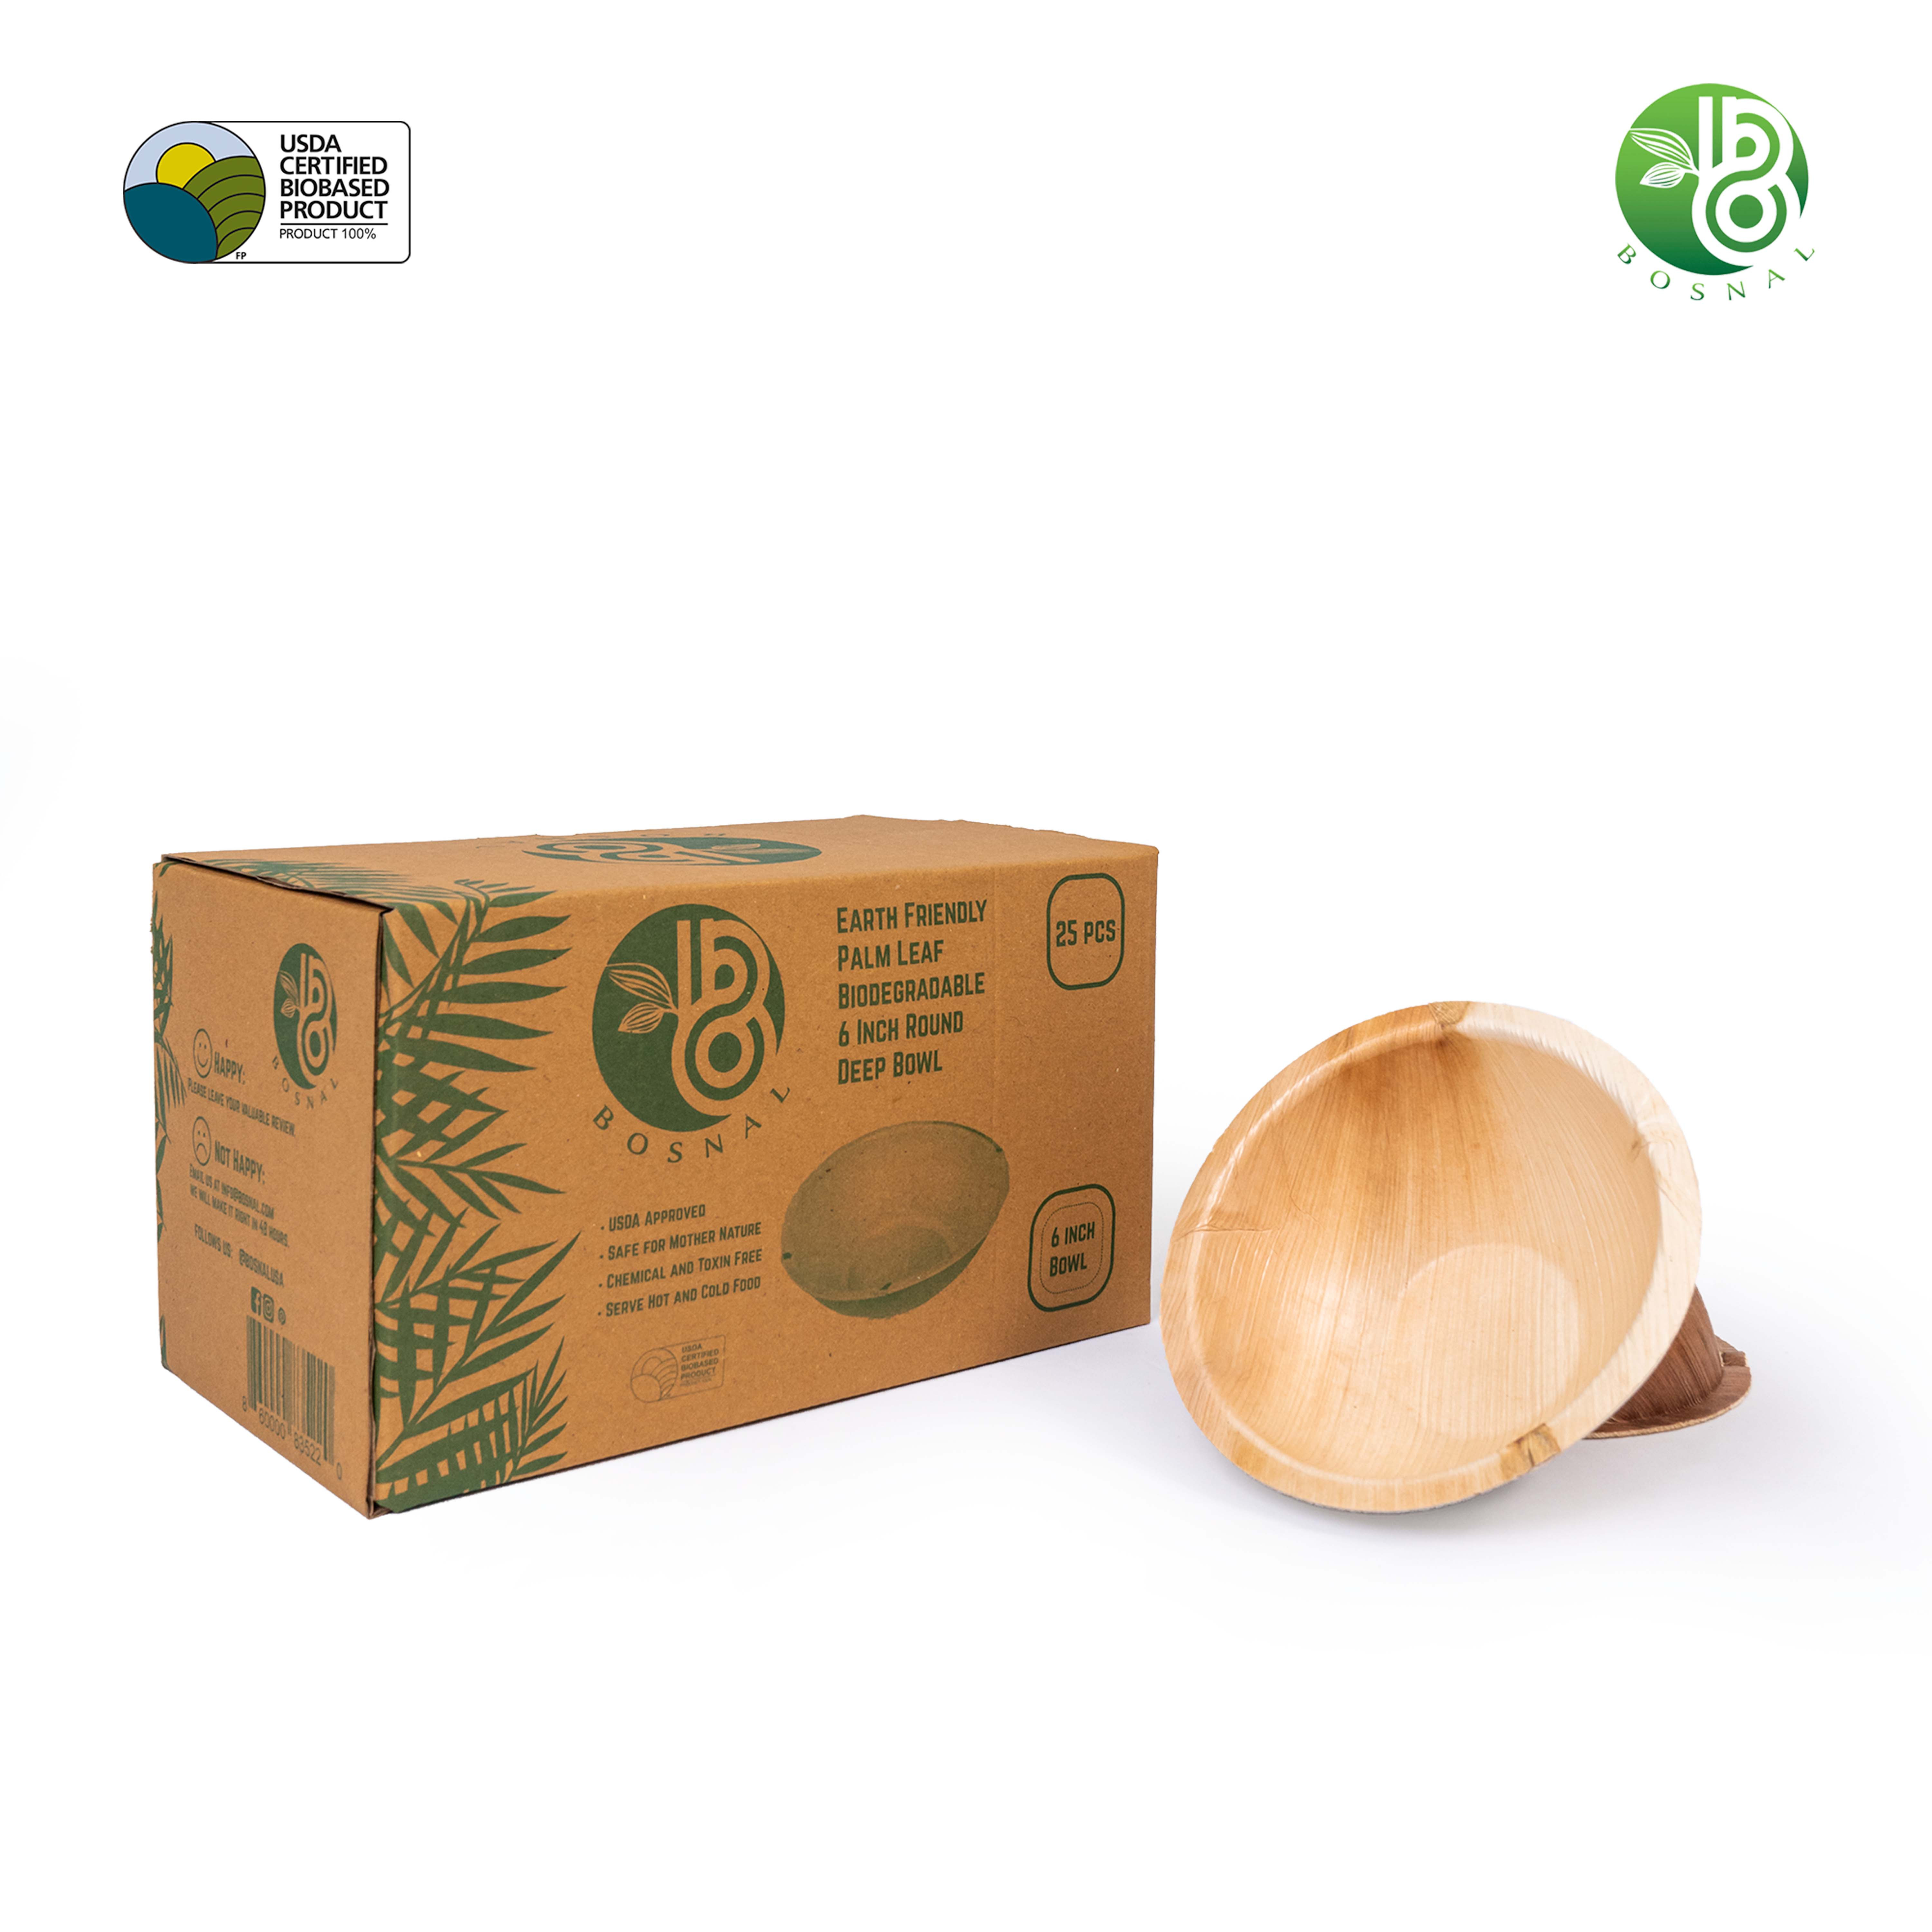 Bosnal - Palm Leaf Biodegradable Plates, 6 inch, Round Bowl, 25 Pcs